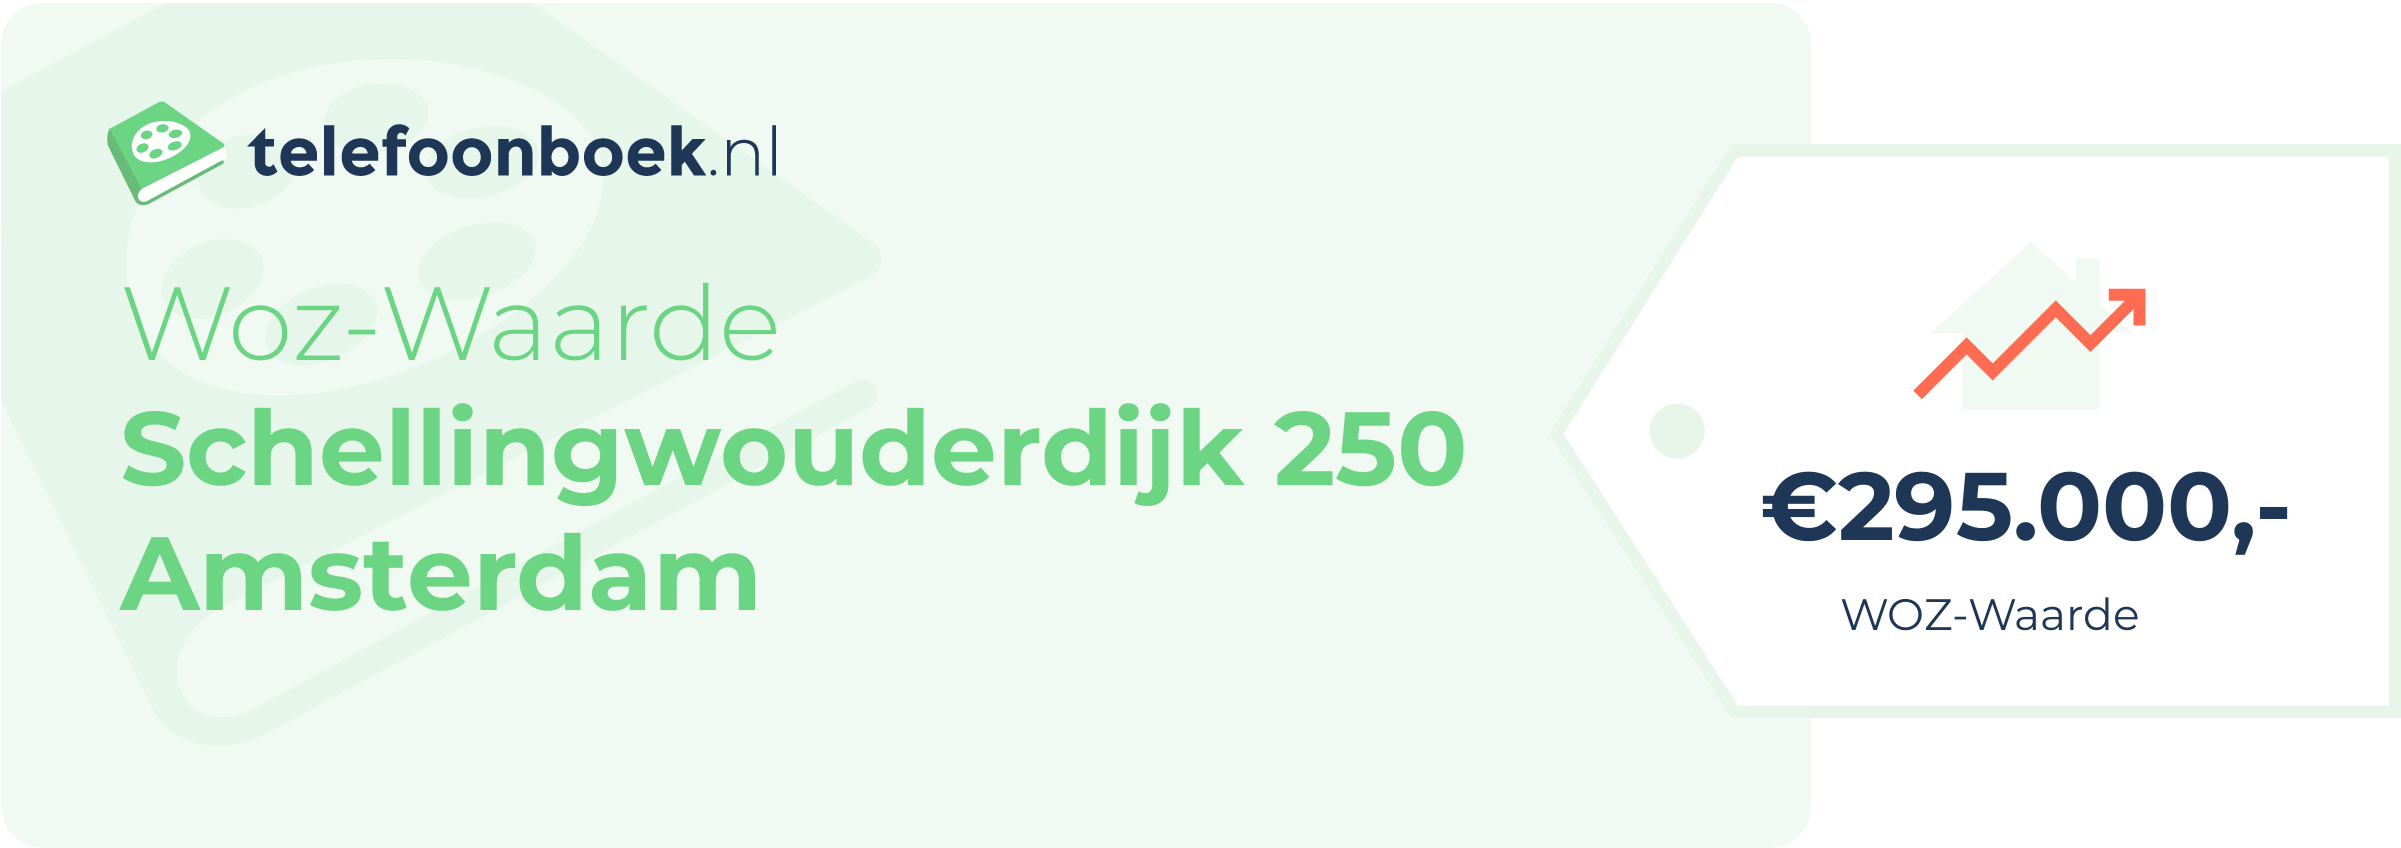 WOZ-waarde Schellingwouderdijk 250 Amsterdam